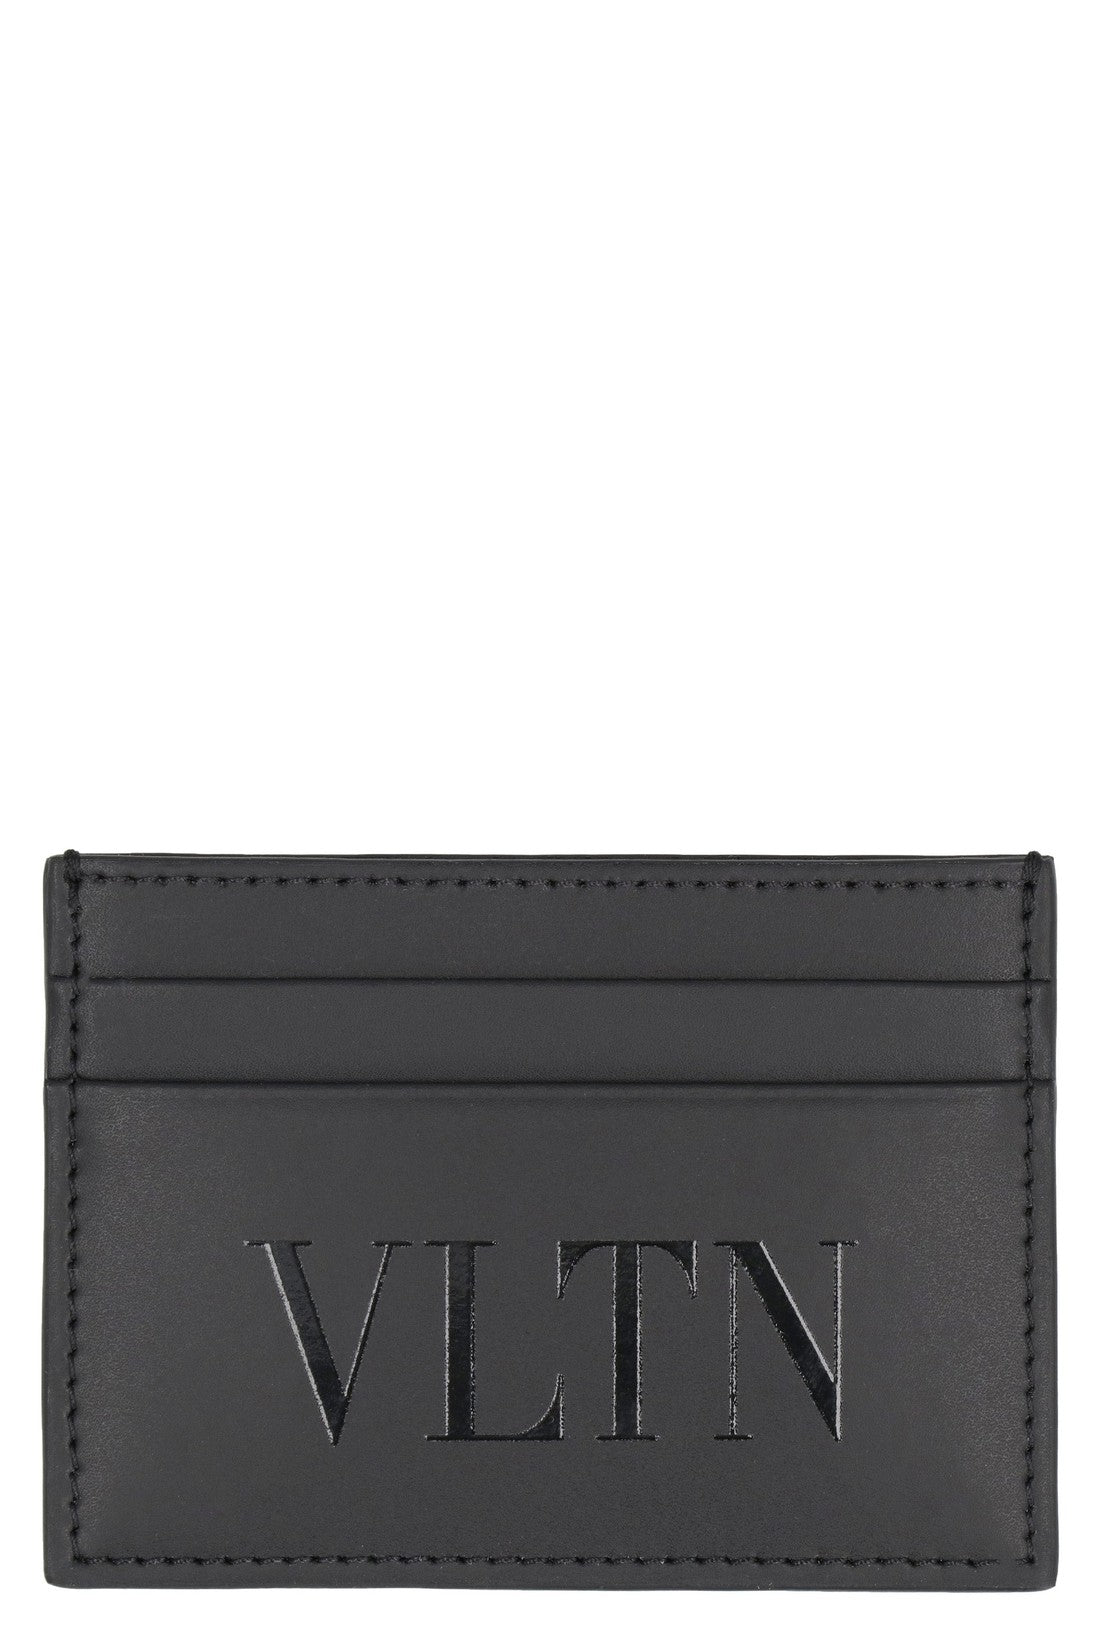 Valentino-OUTLET-SALE-Valentino Gravani - Leather card holder-ARCHIVIST